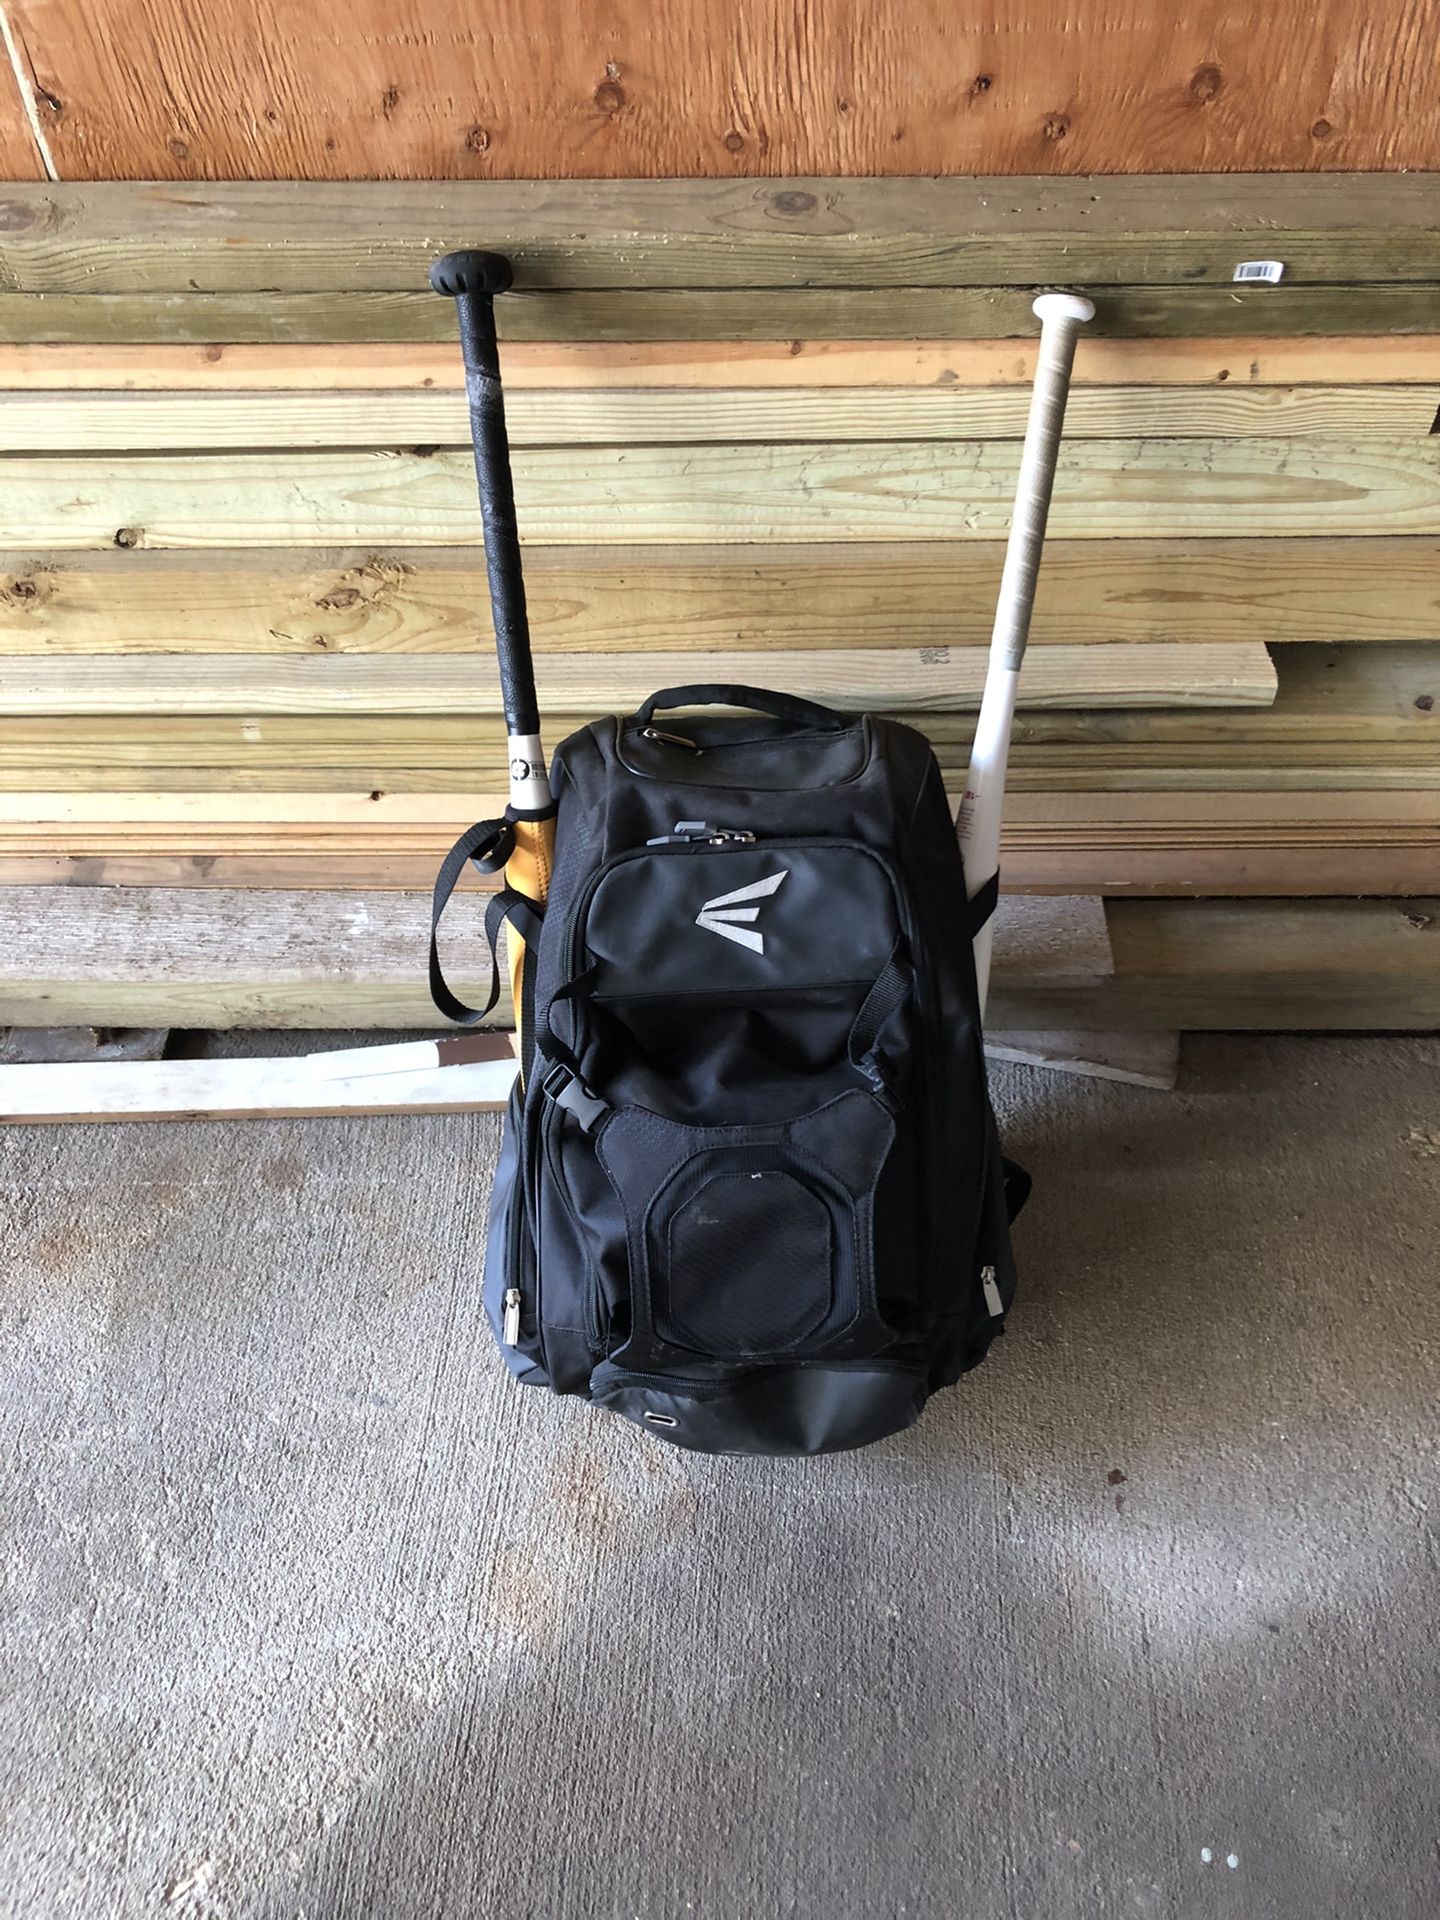 Easton softball or baseball backpack